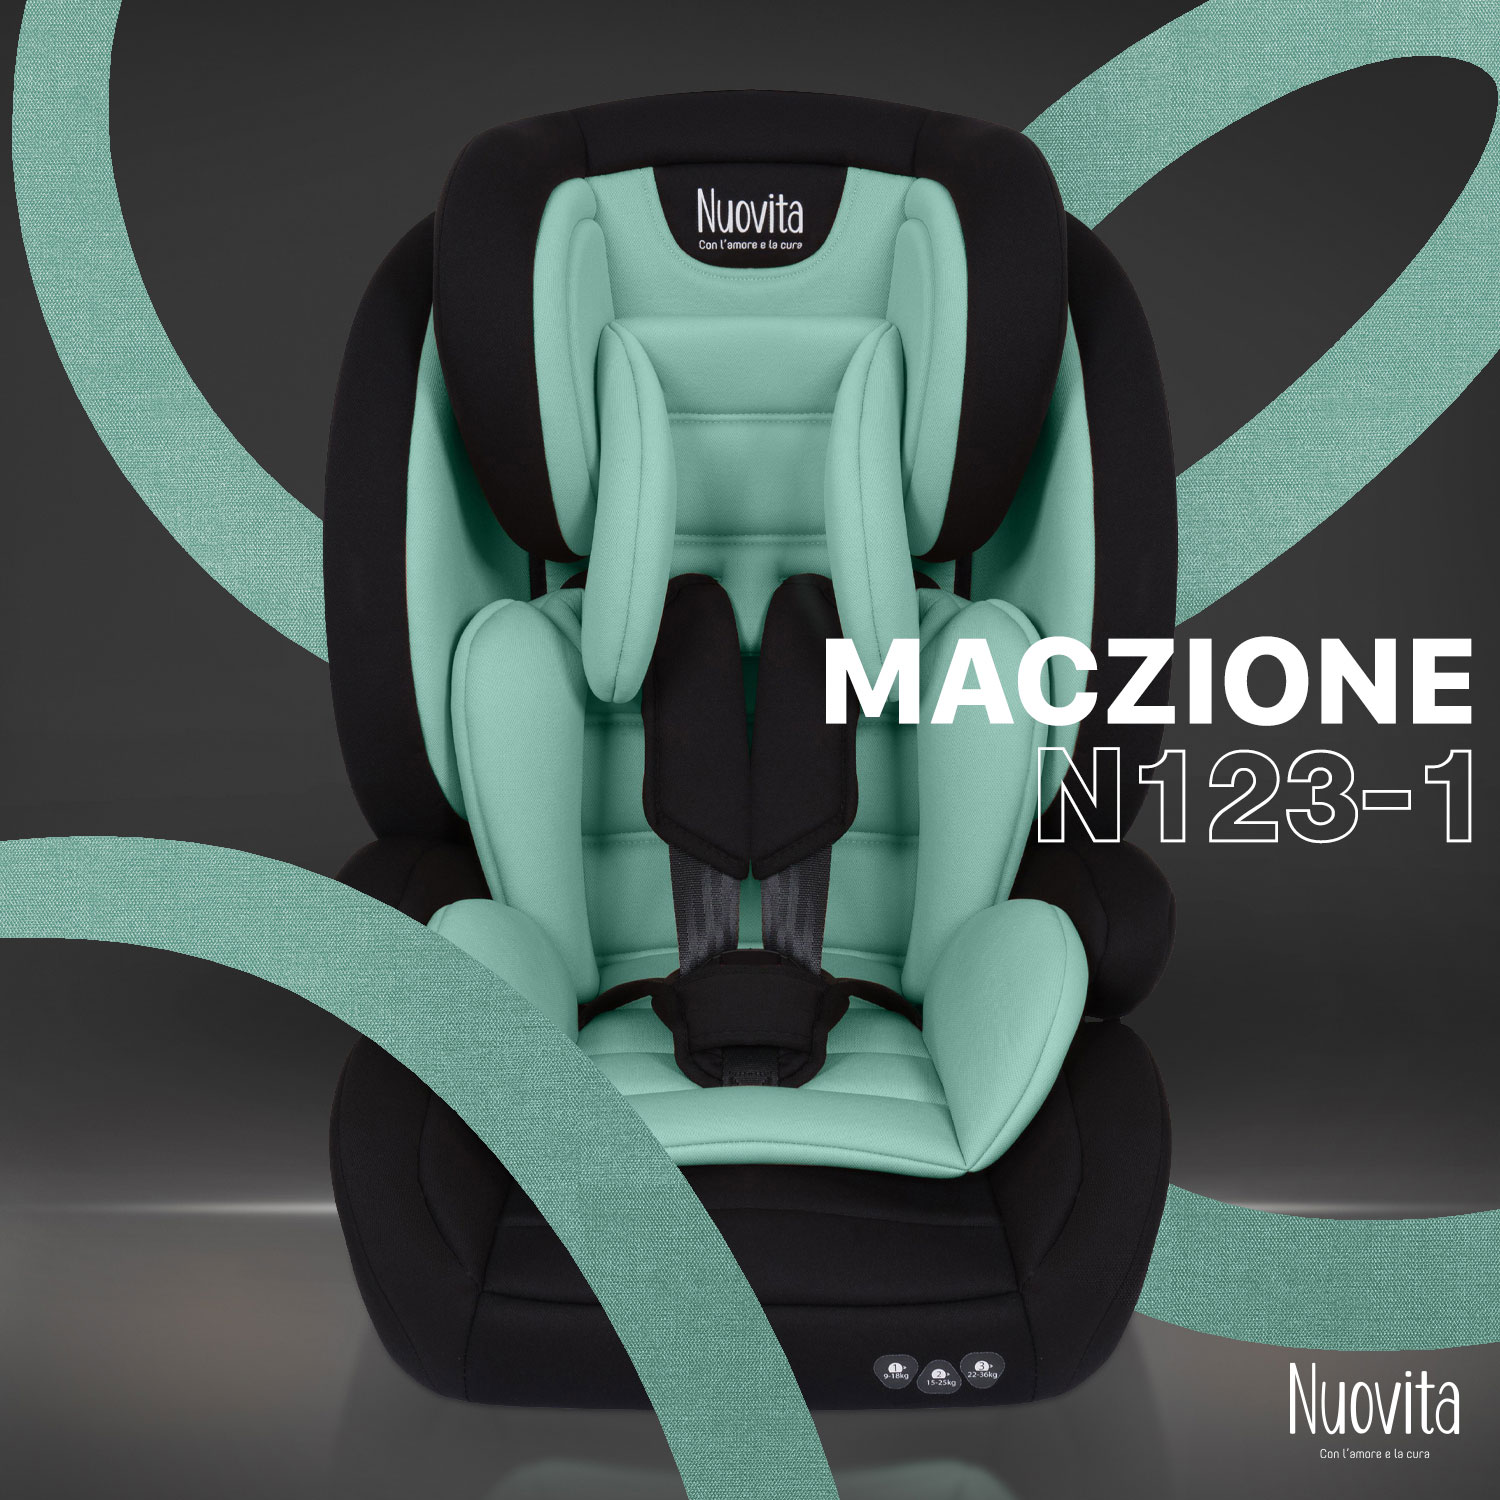 Детское автокресло трансформер Nuovita Maczione N123-1, группа 1-2-3, 9-36 кг (Тиффани)